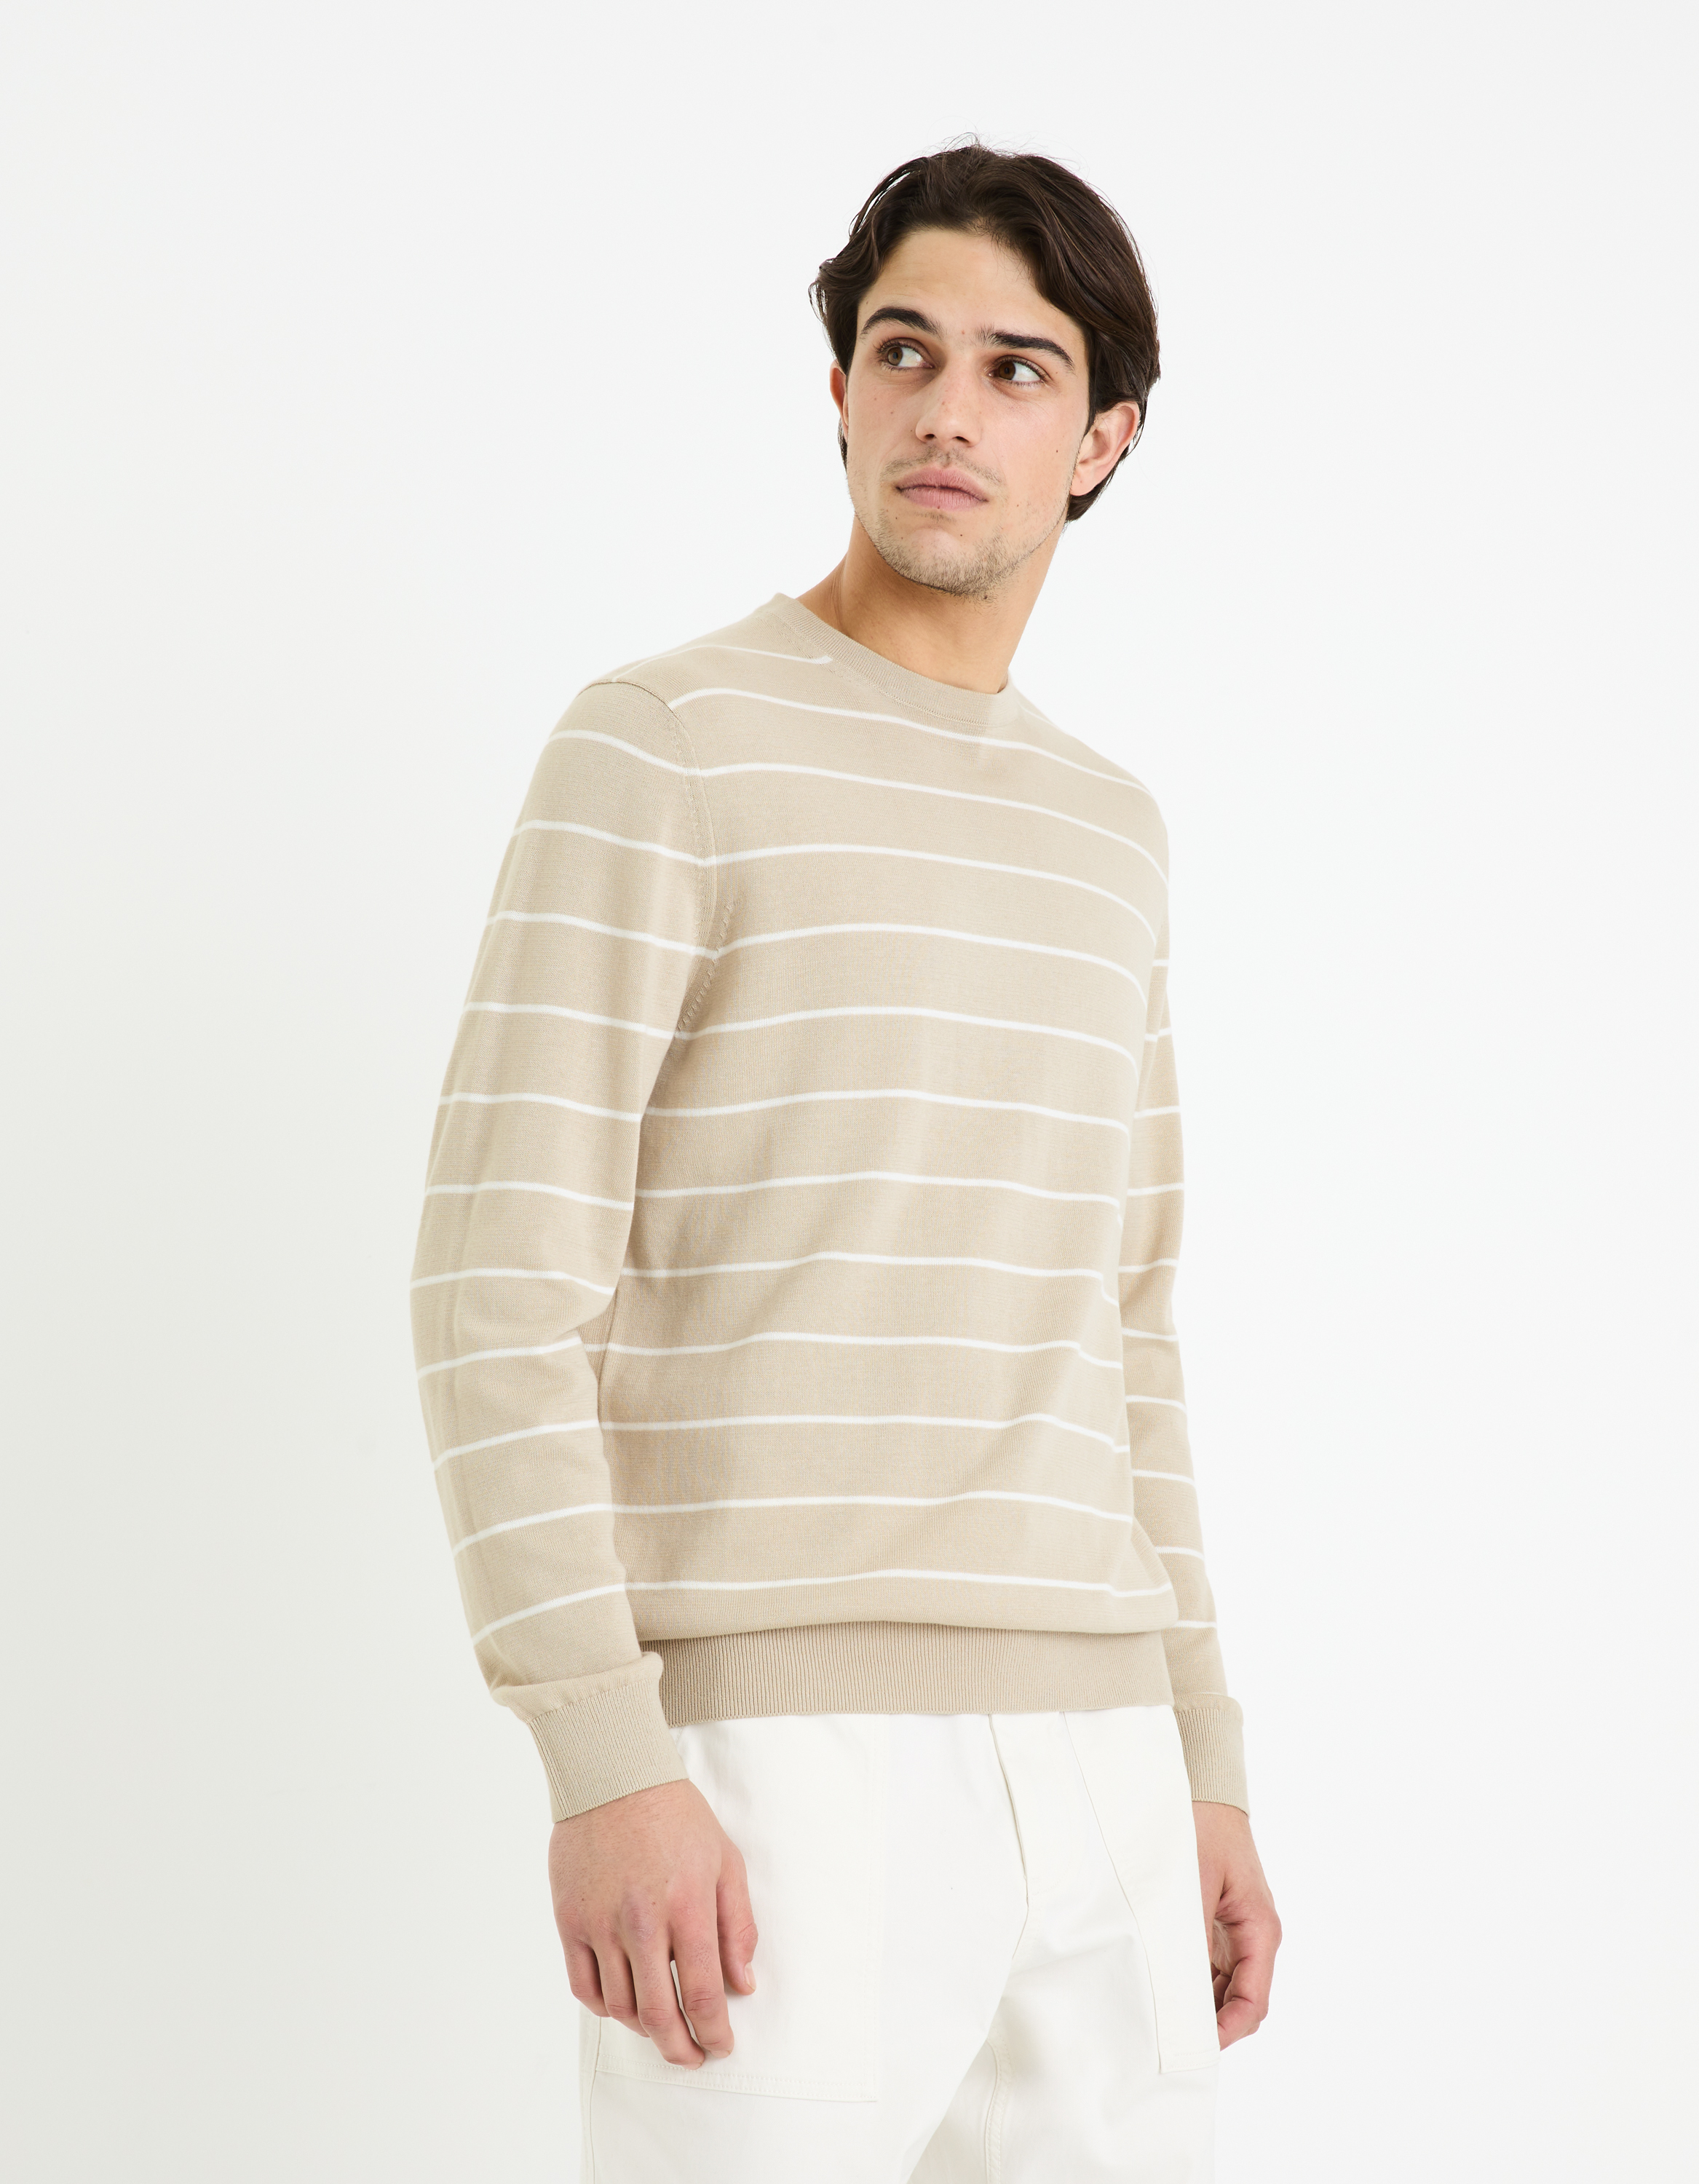 Celio Striped Sweater Decoton - Men's